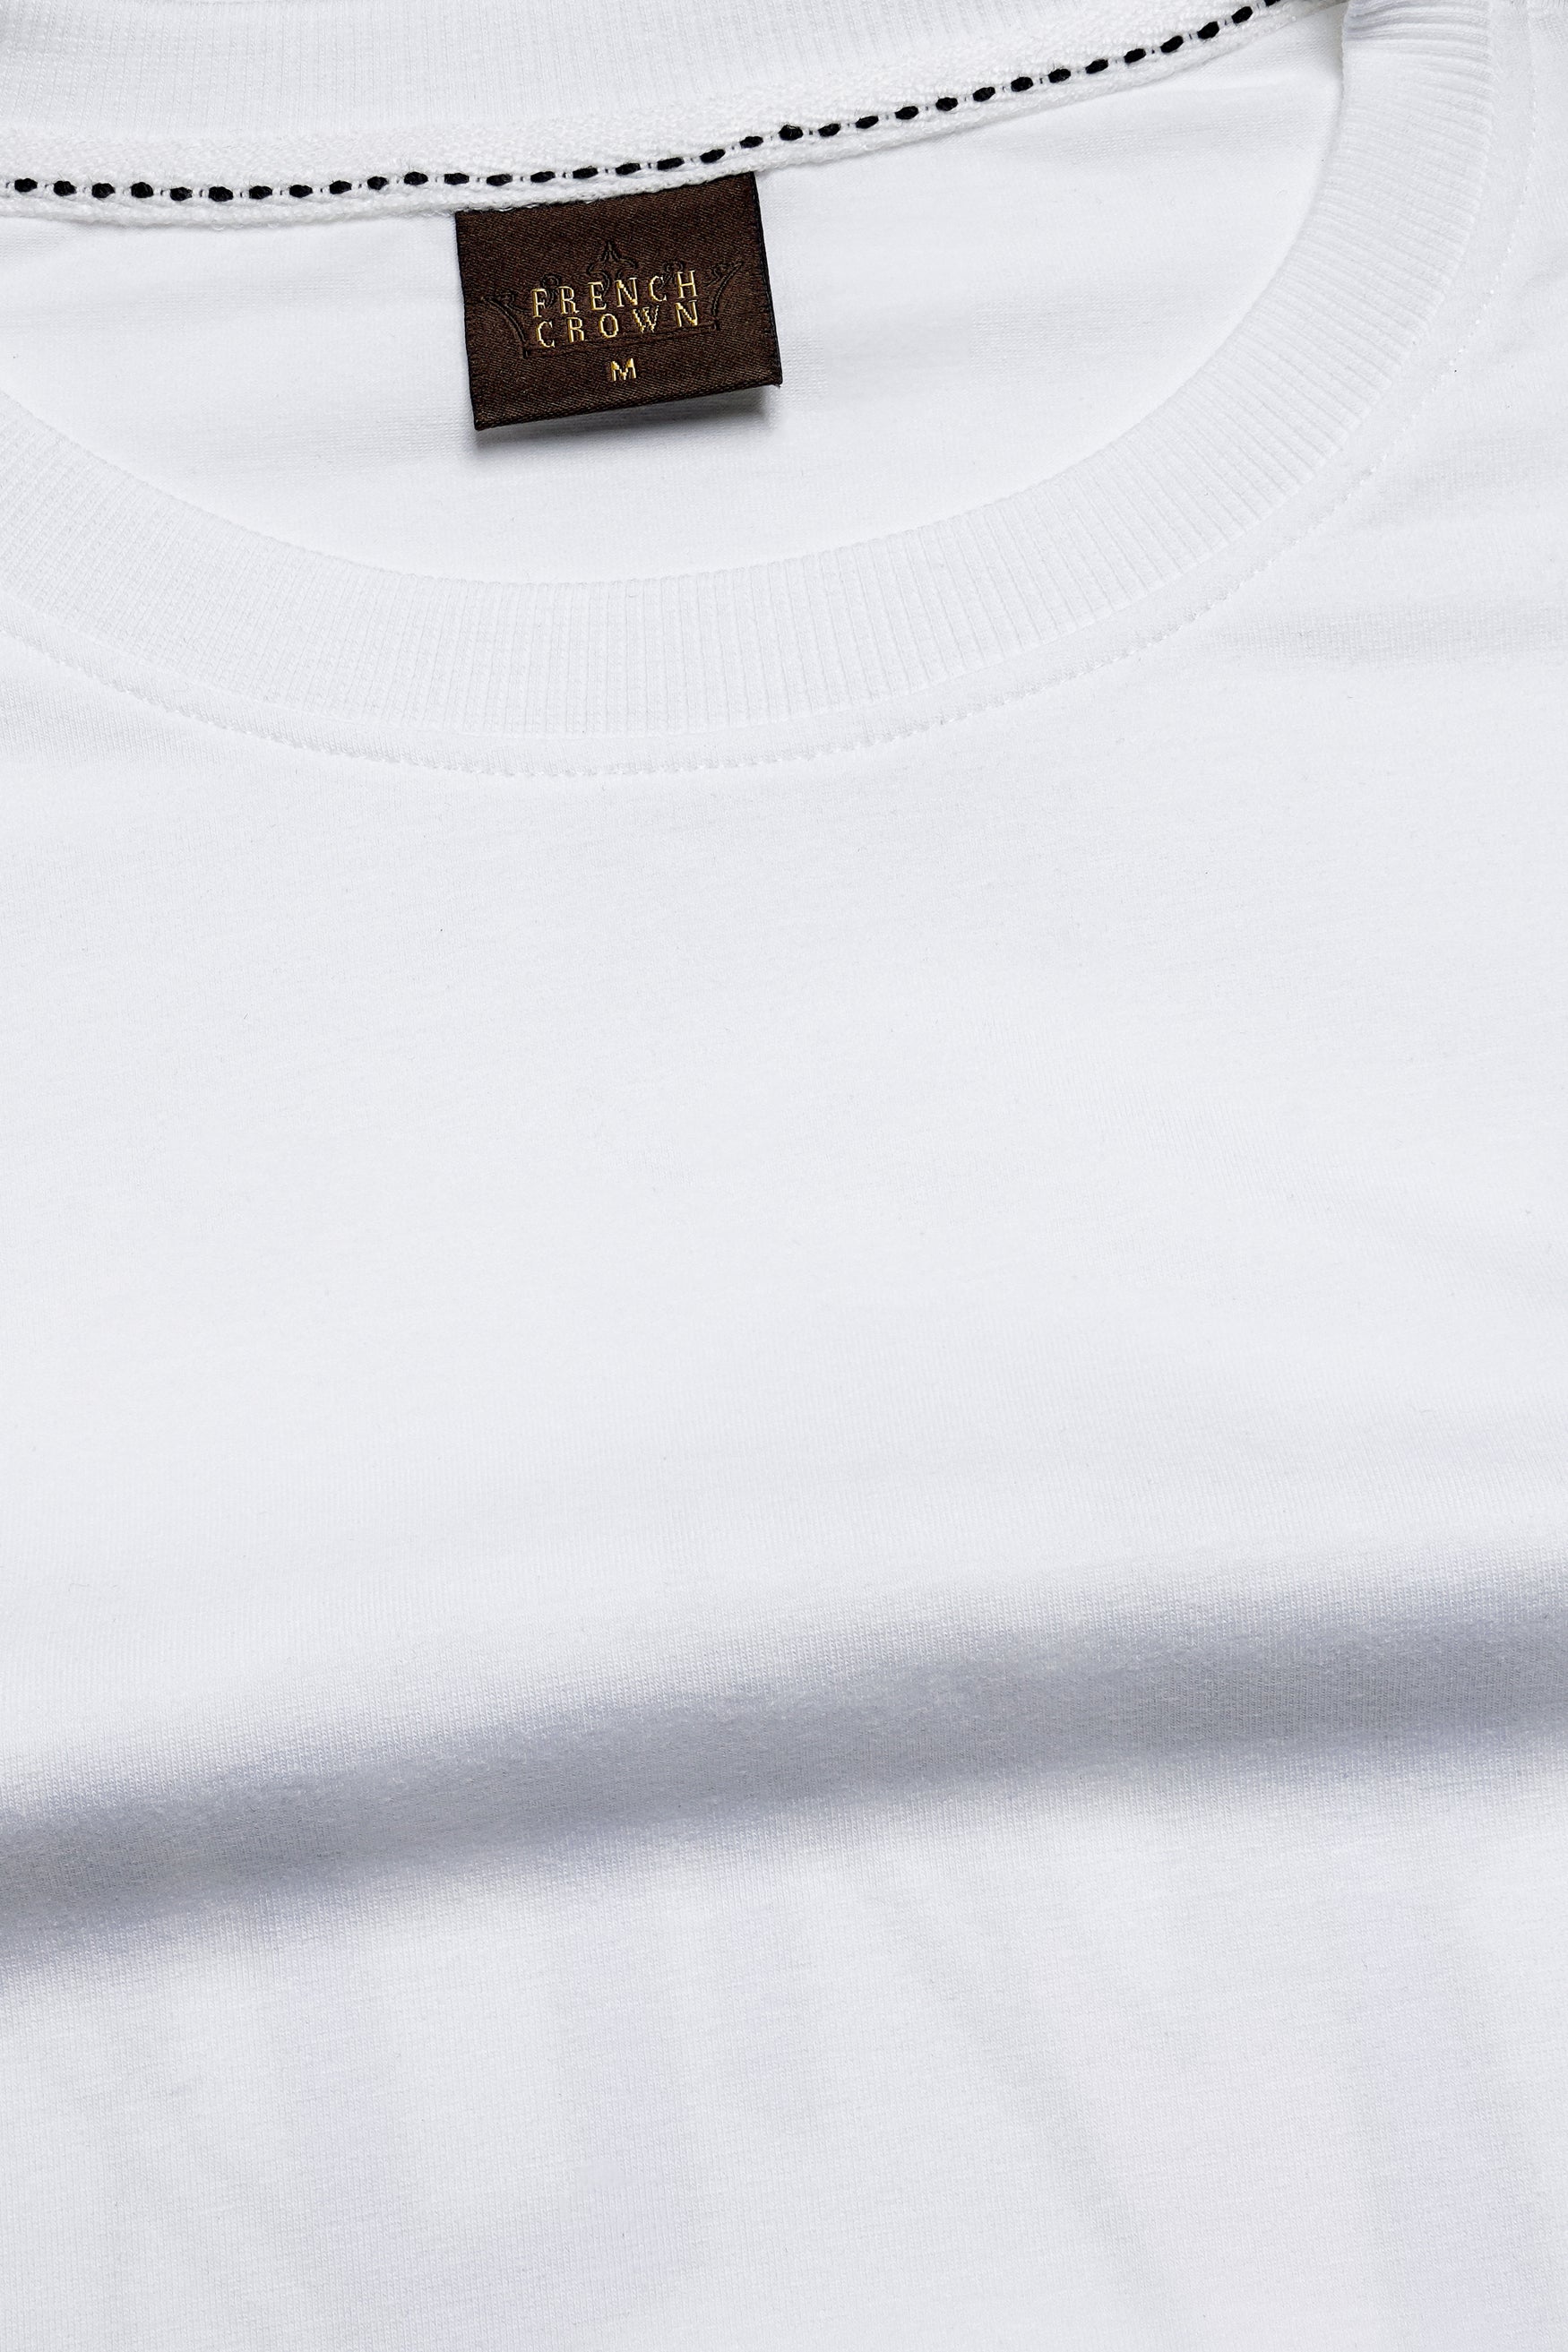 Bright White Printed Premium Cotton T shirt